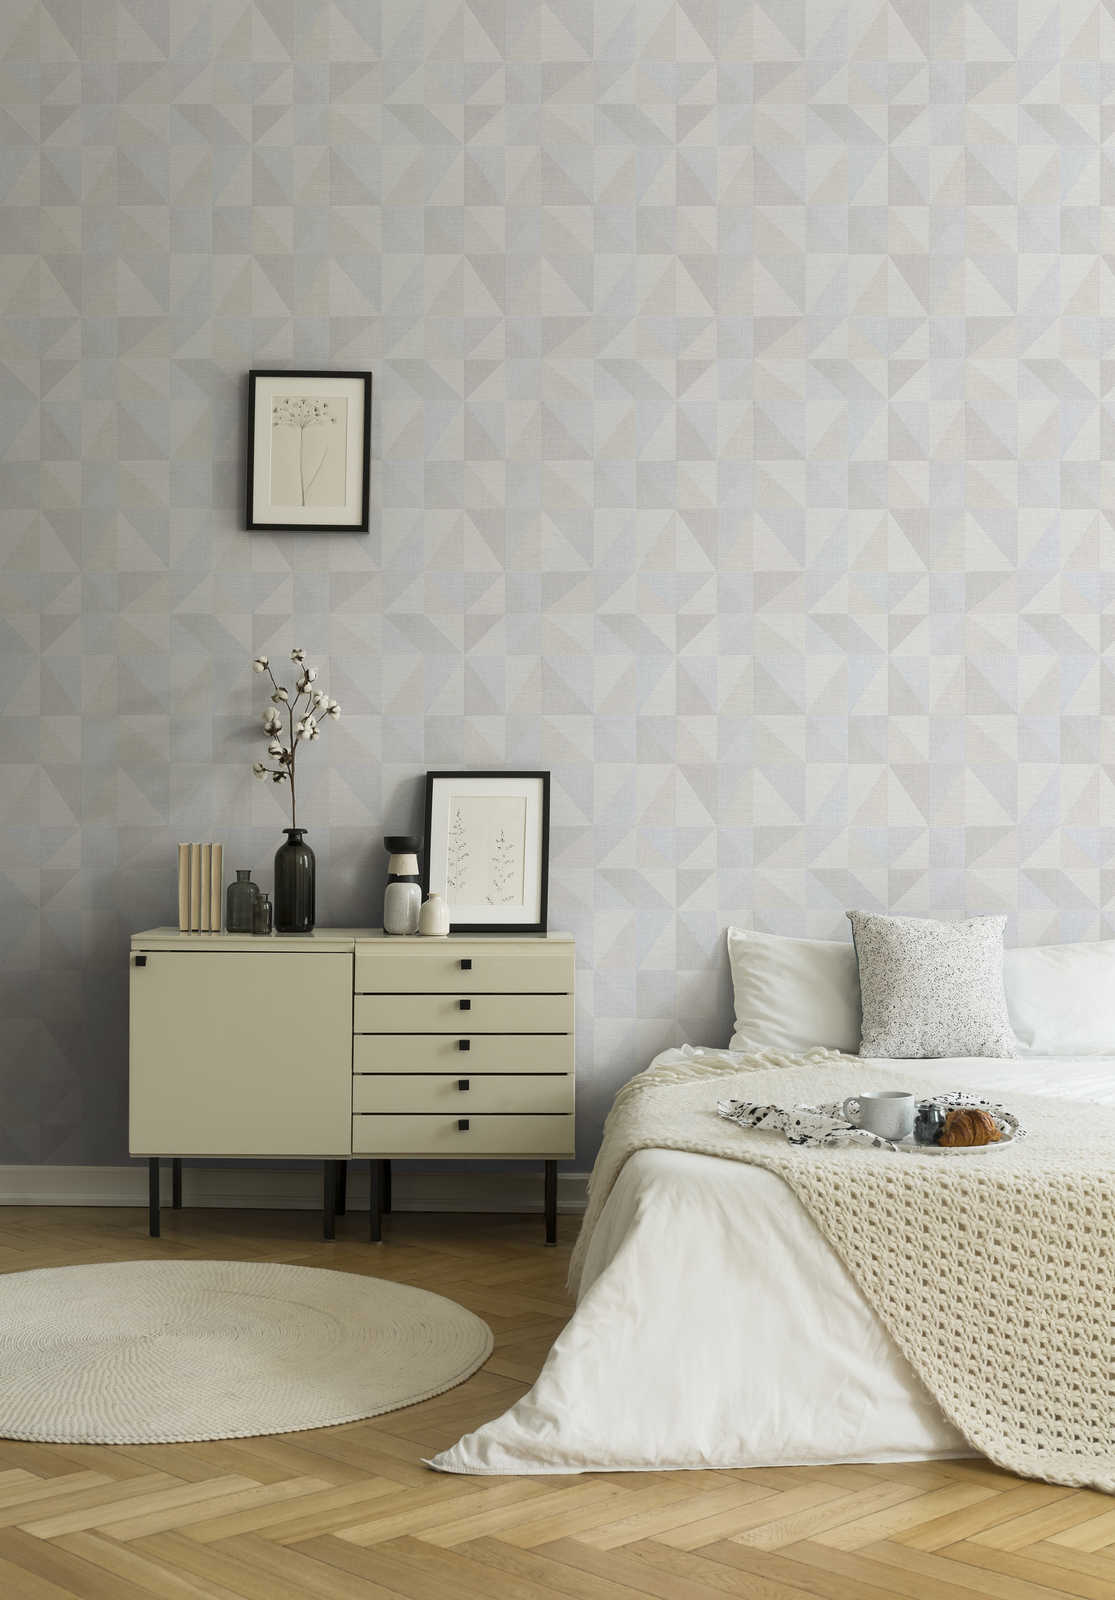             Vliesbehang Scandi design & geometrisch patroon - grijs
        